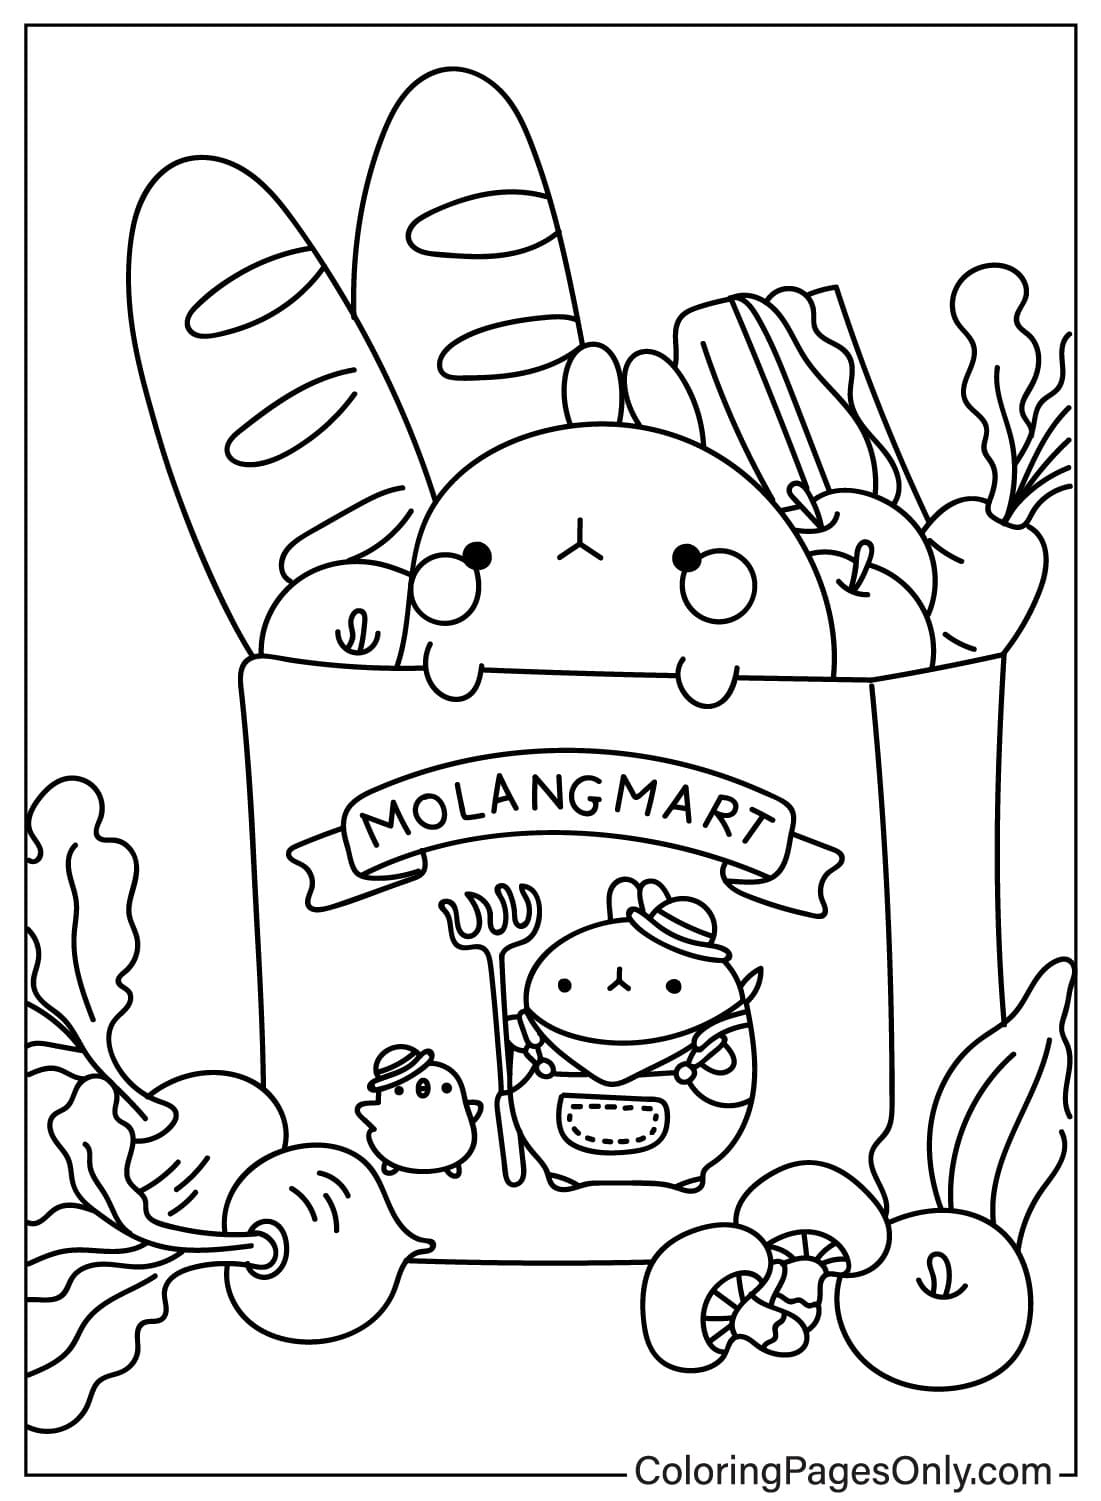 Página para colorear de Molang Mart de Molang